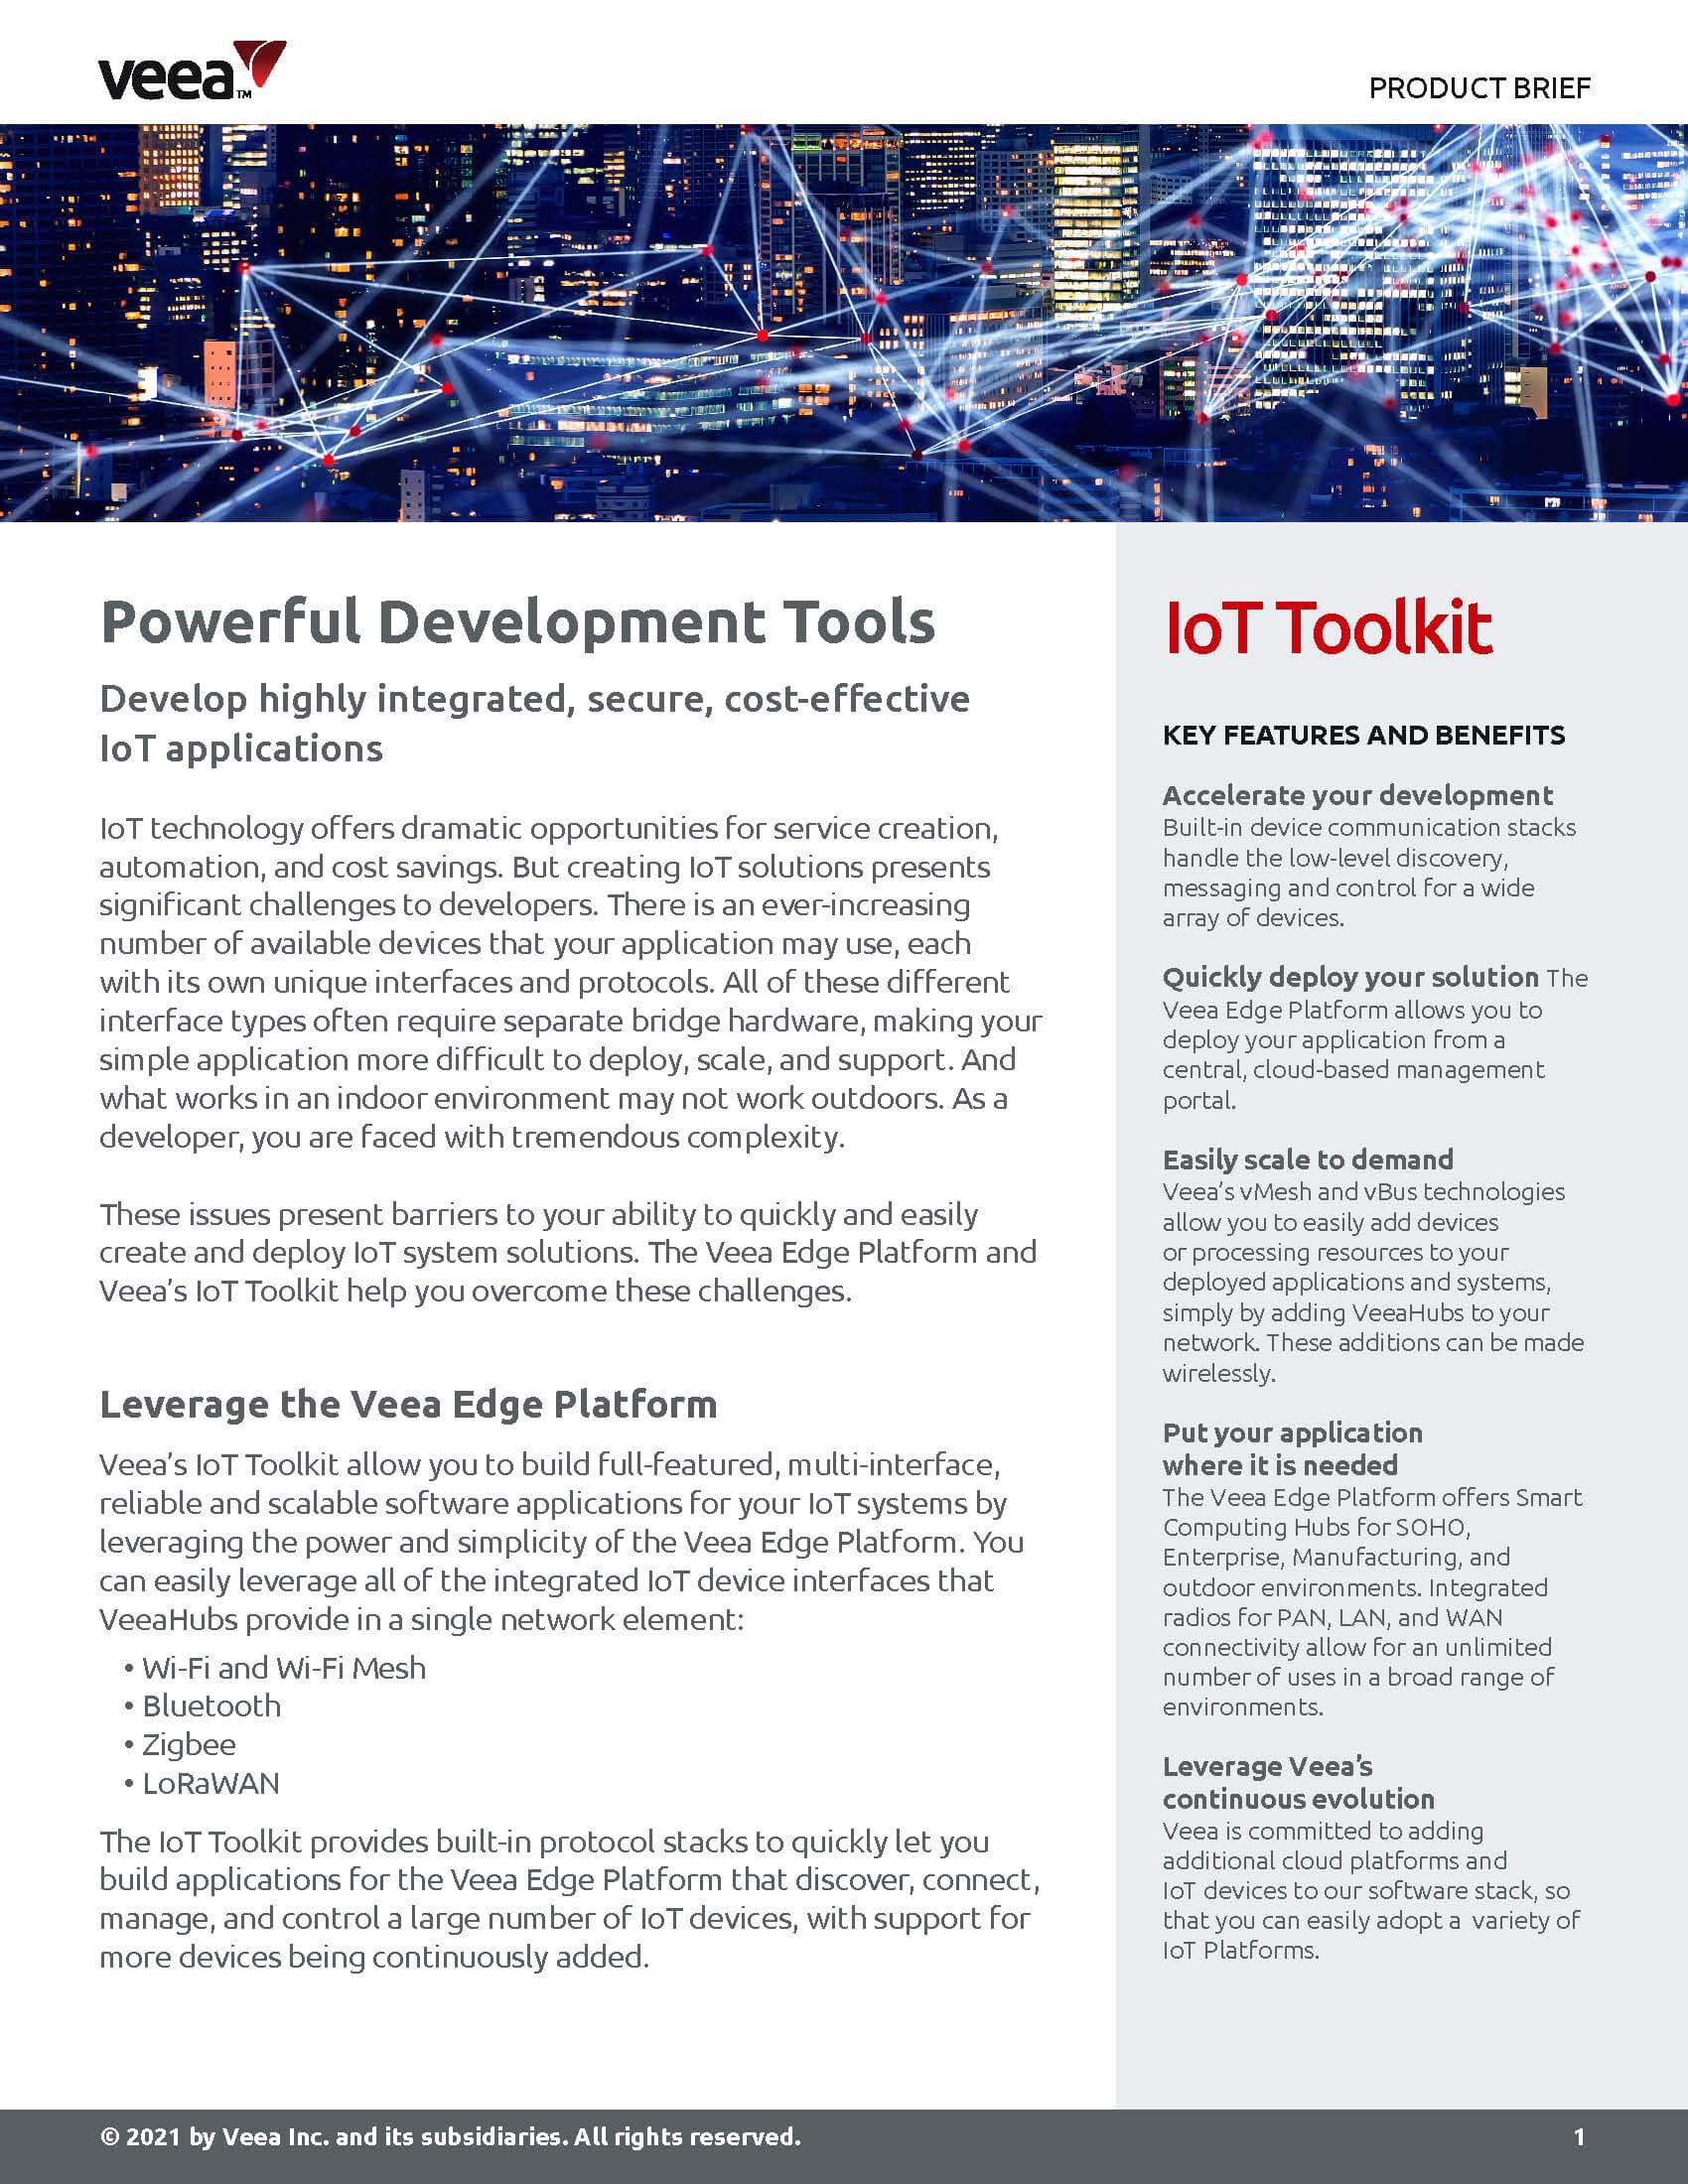 IoT Toolkit prod brief cover